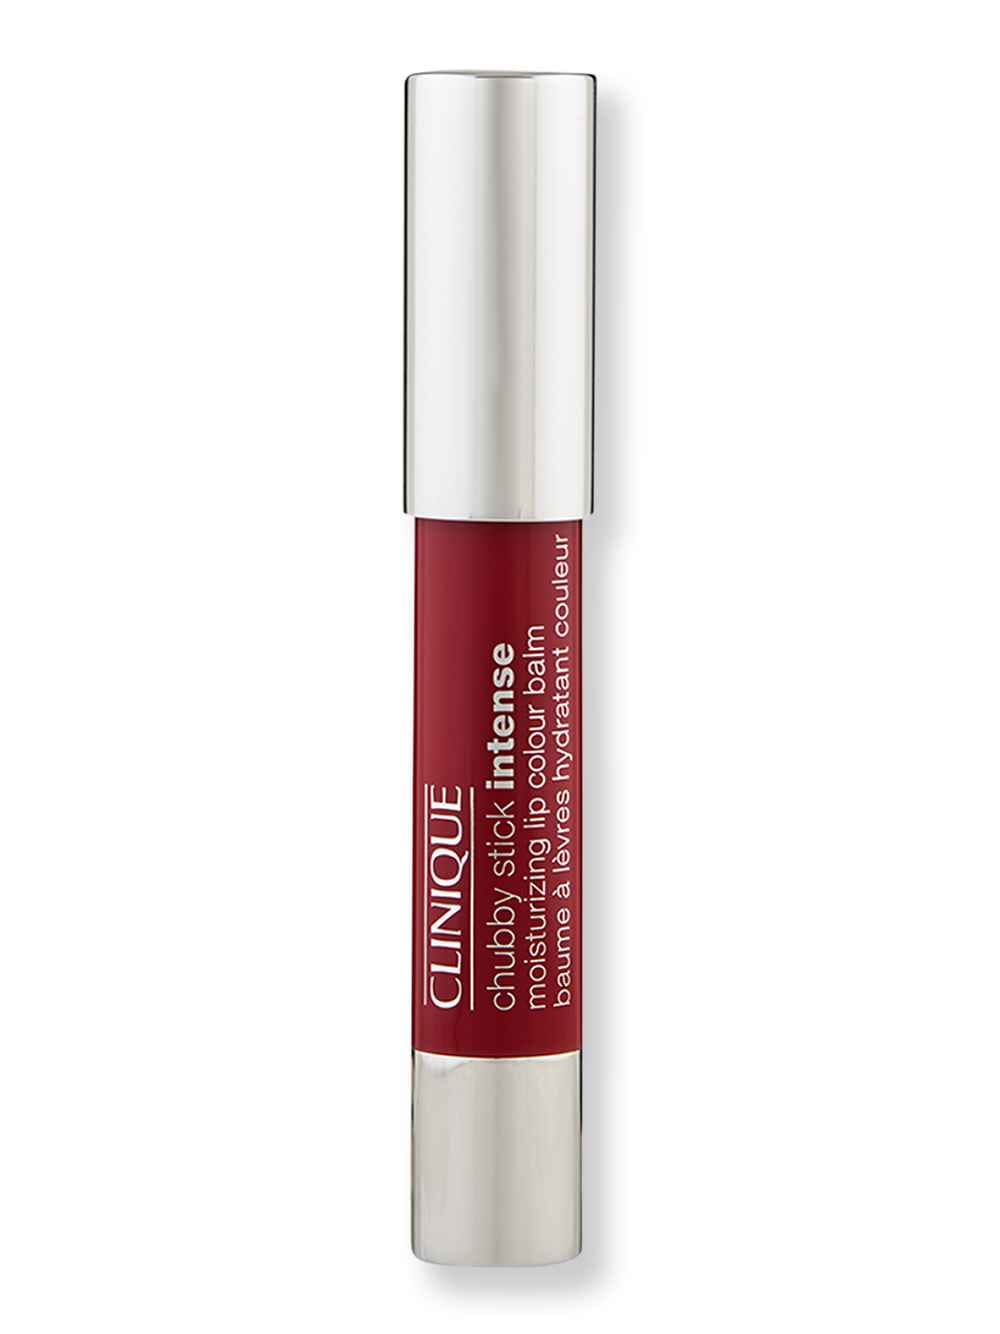 Clinique Clinique Chubby Stick Intense Moisturizing Lip Colour Balm 3 g06 Roomiest Rose Lip Treatments & Balms 